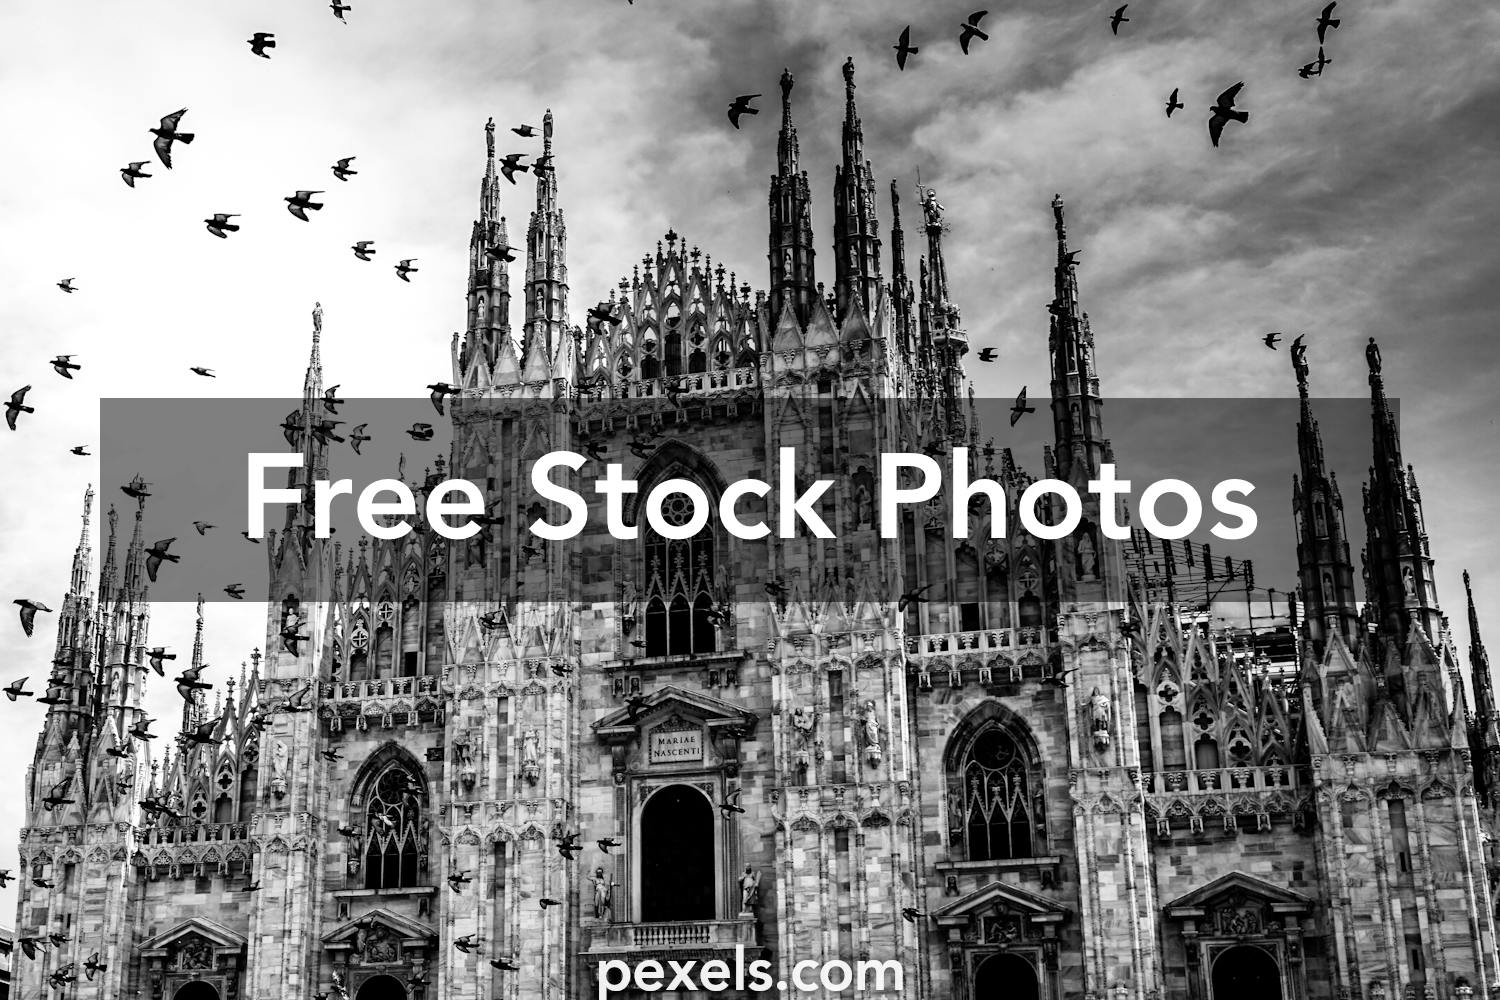 250 Engaging Gothic Photos Pexels Free Stock Photos Images, Photos, Reviews